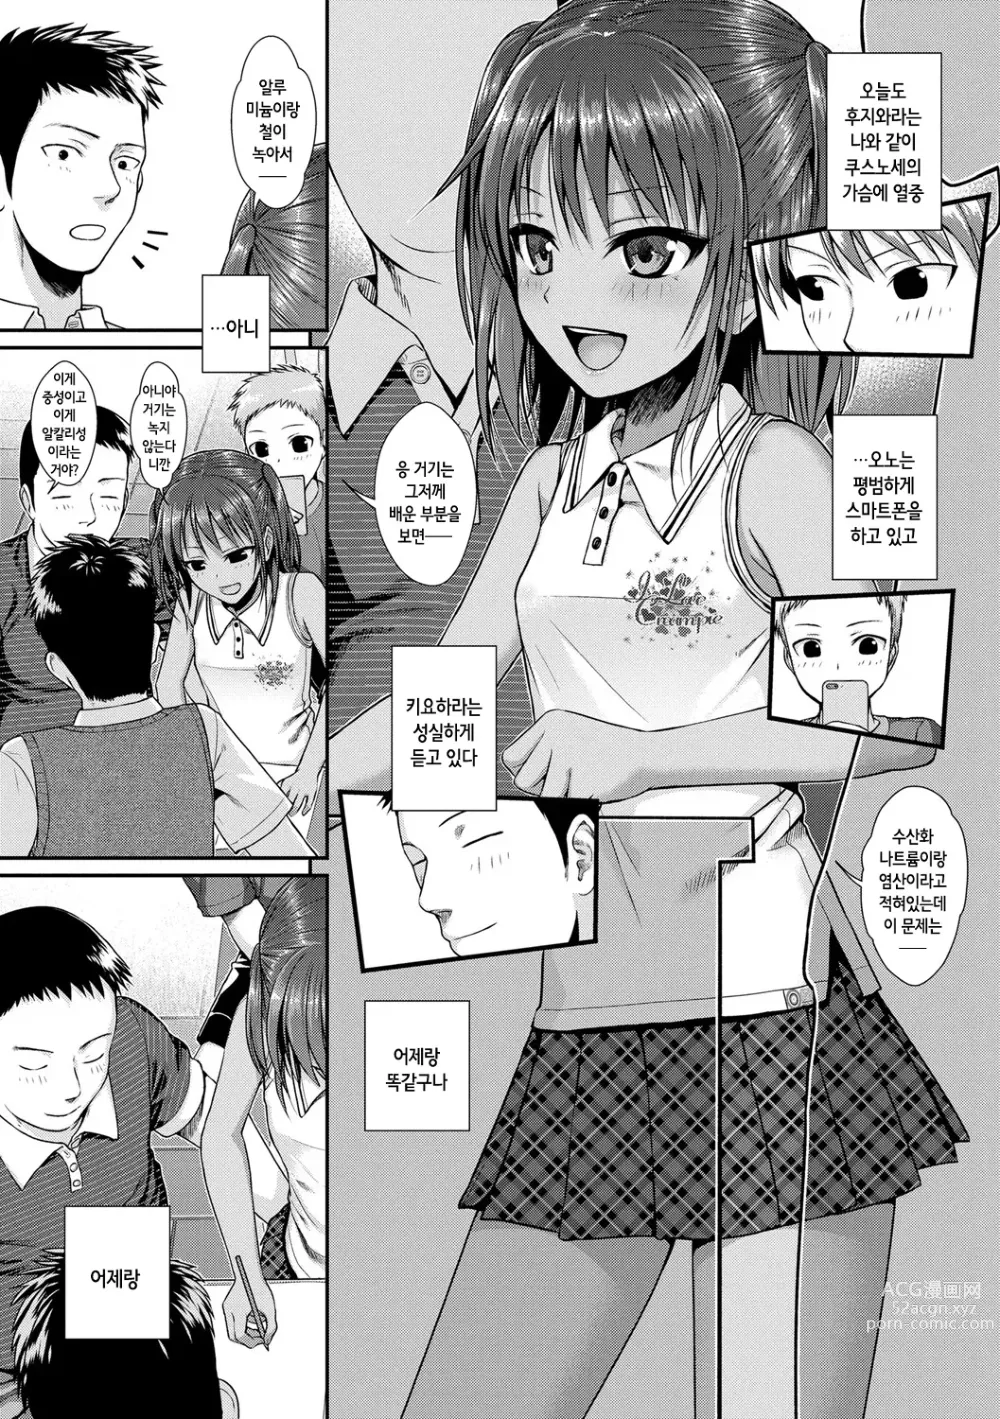 Page 15 of manga 프로토타입 로리타 + 토라노아나 구입 특전 4P 리플렛 휴일은 아저씨와 (decensored)